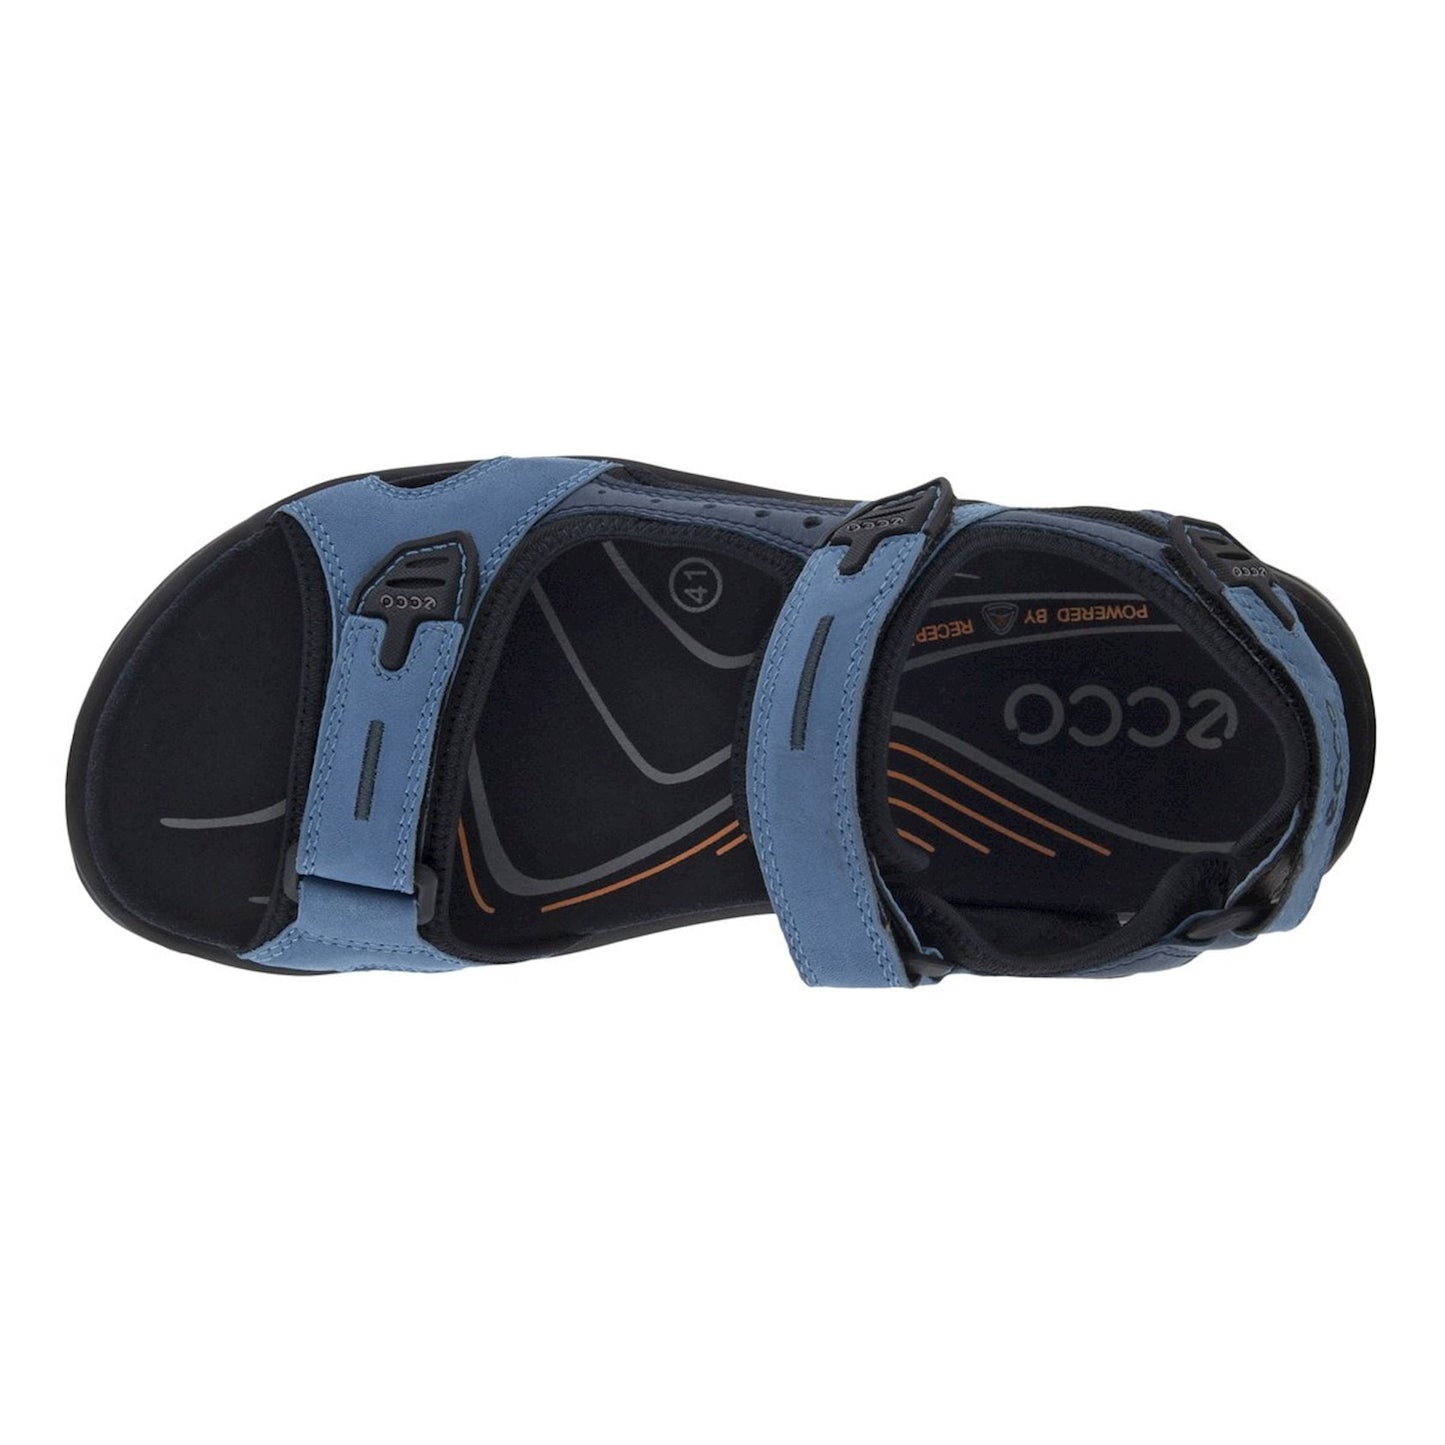 YUCATAN PETRO BLUE | Men's sandals Ecco 6956456923, blue, genuine leather/nubuck/textile-Brandy